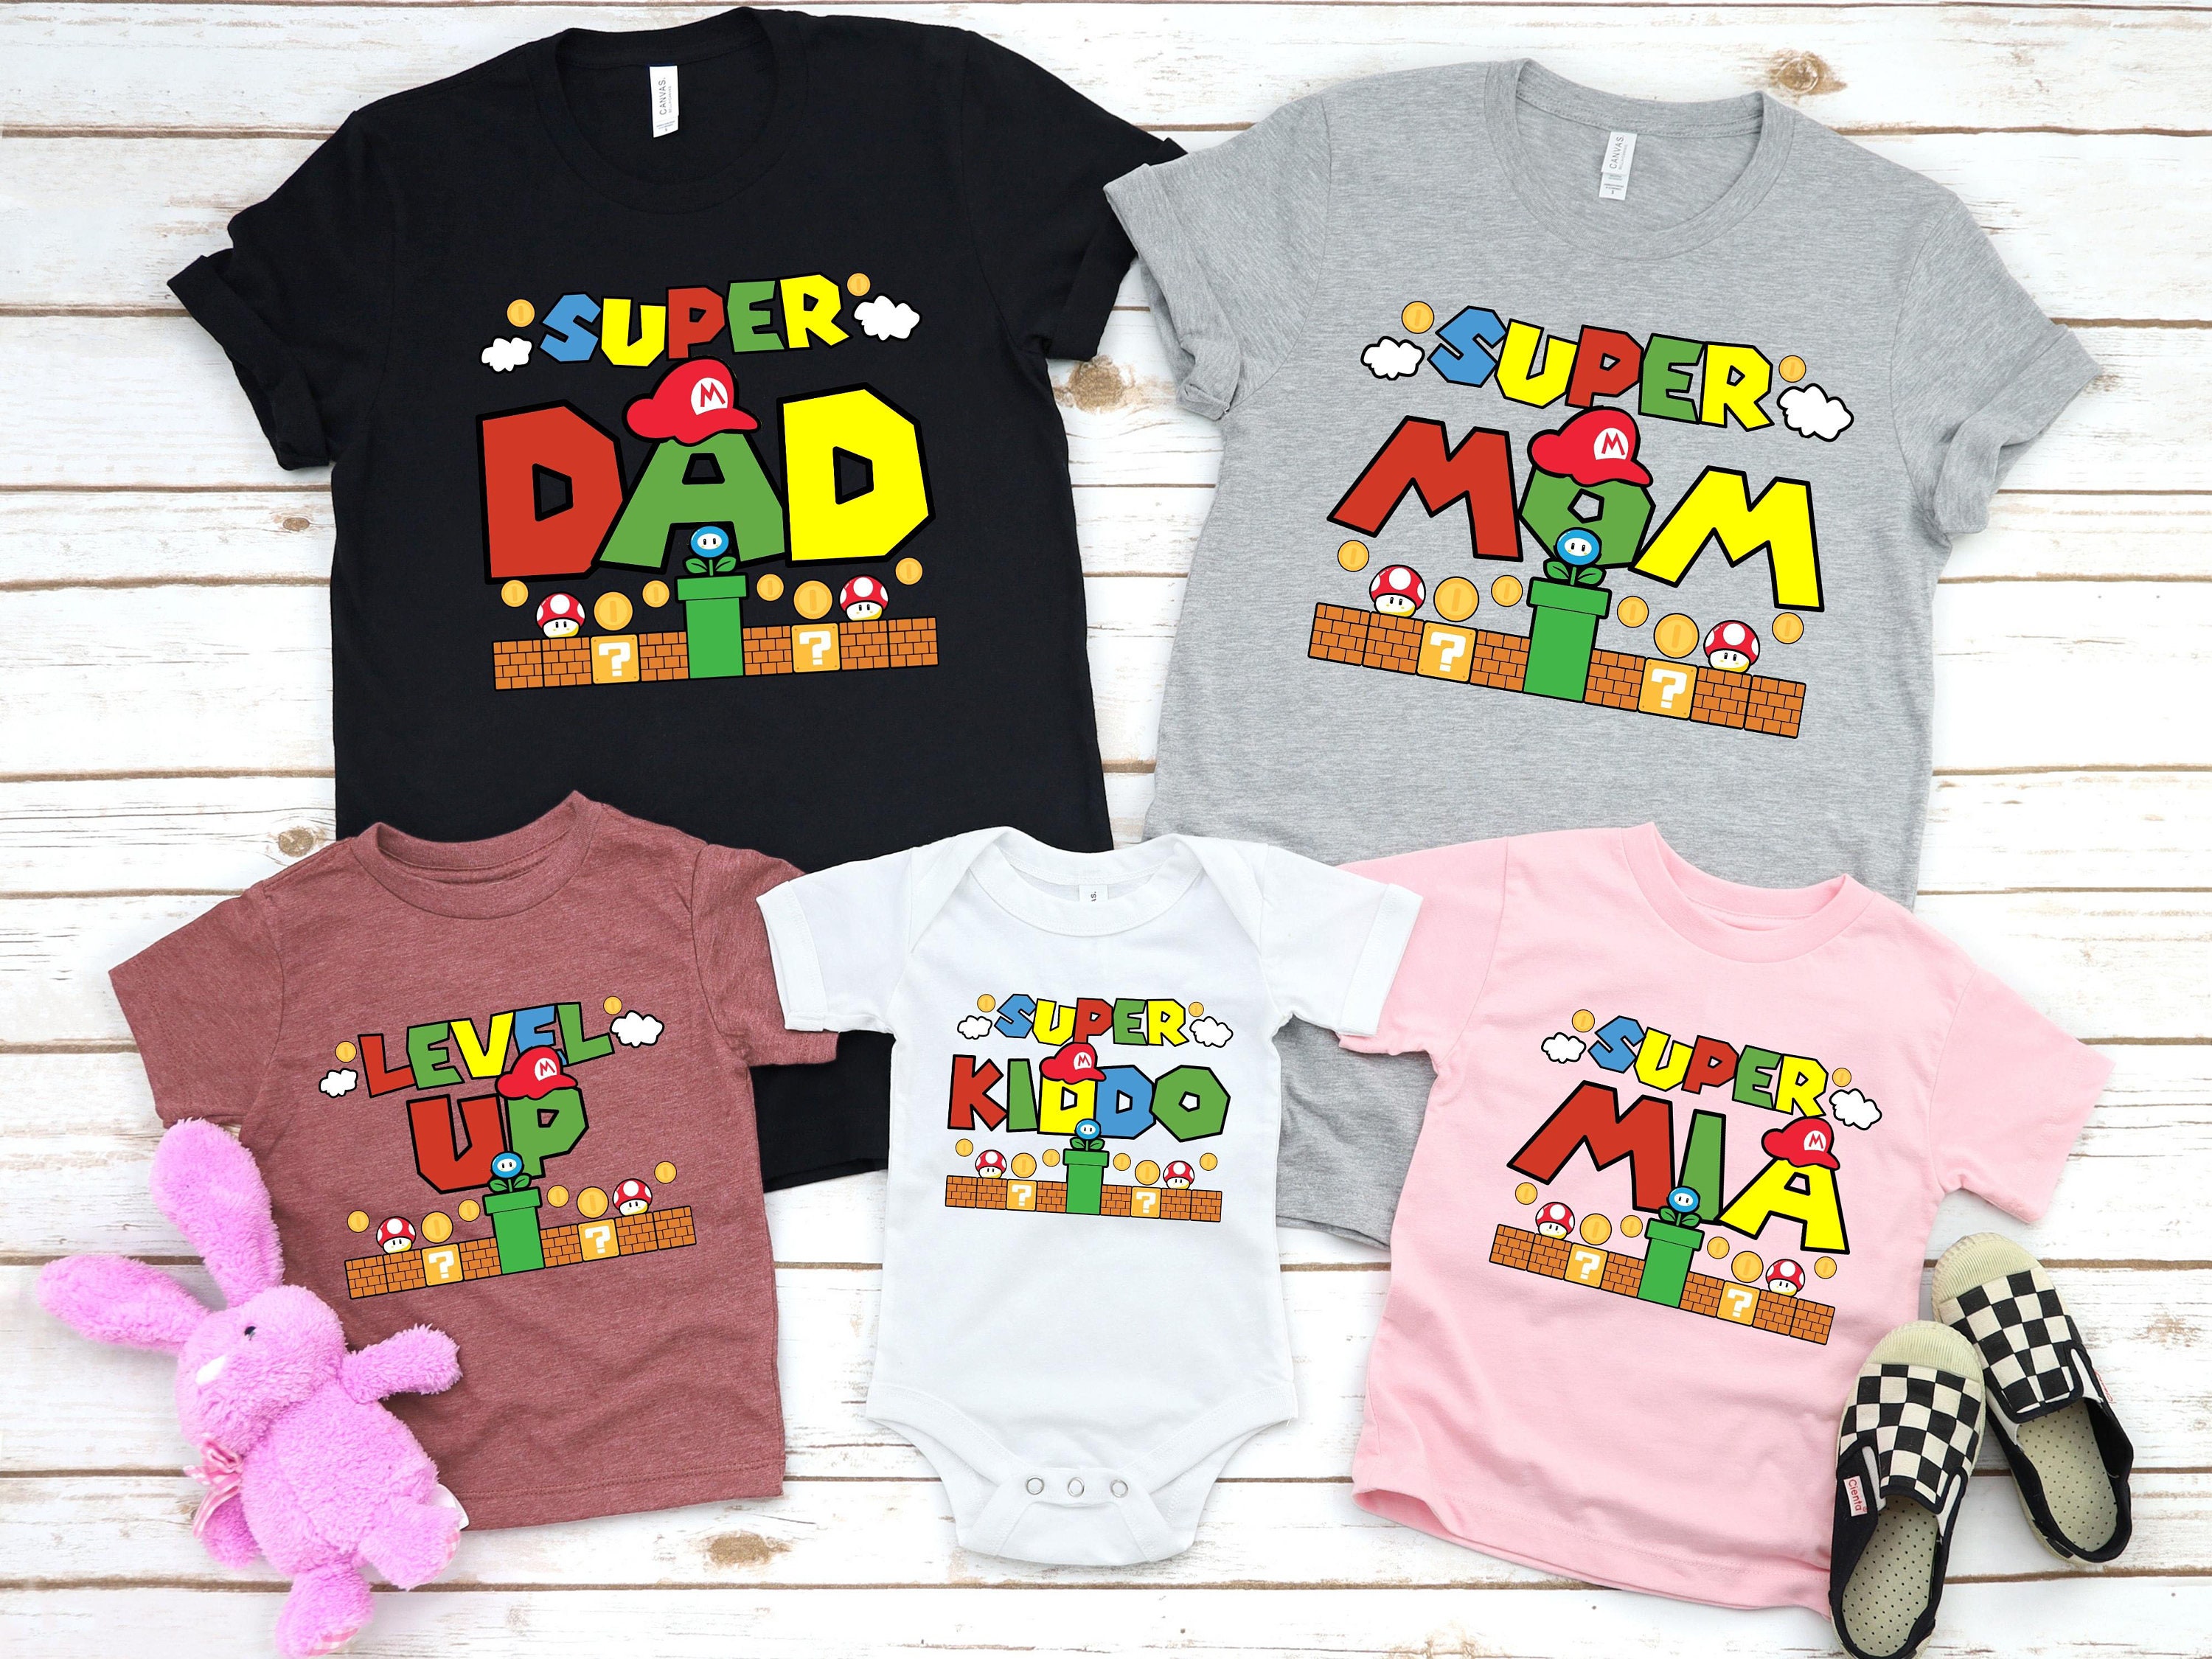 Super Mario Parody Black Boys Kids T-shirt - Mario (Funny Super Mario  Parody - High Quality T-shirt - Size 615 - Ref : 615)